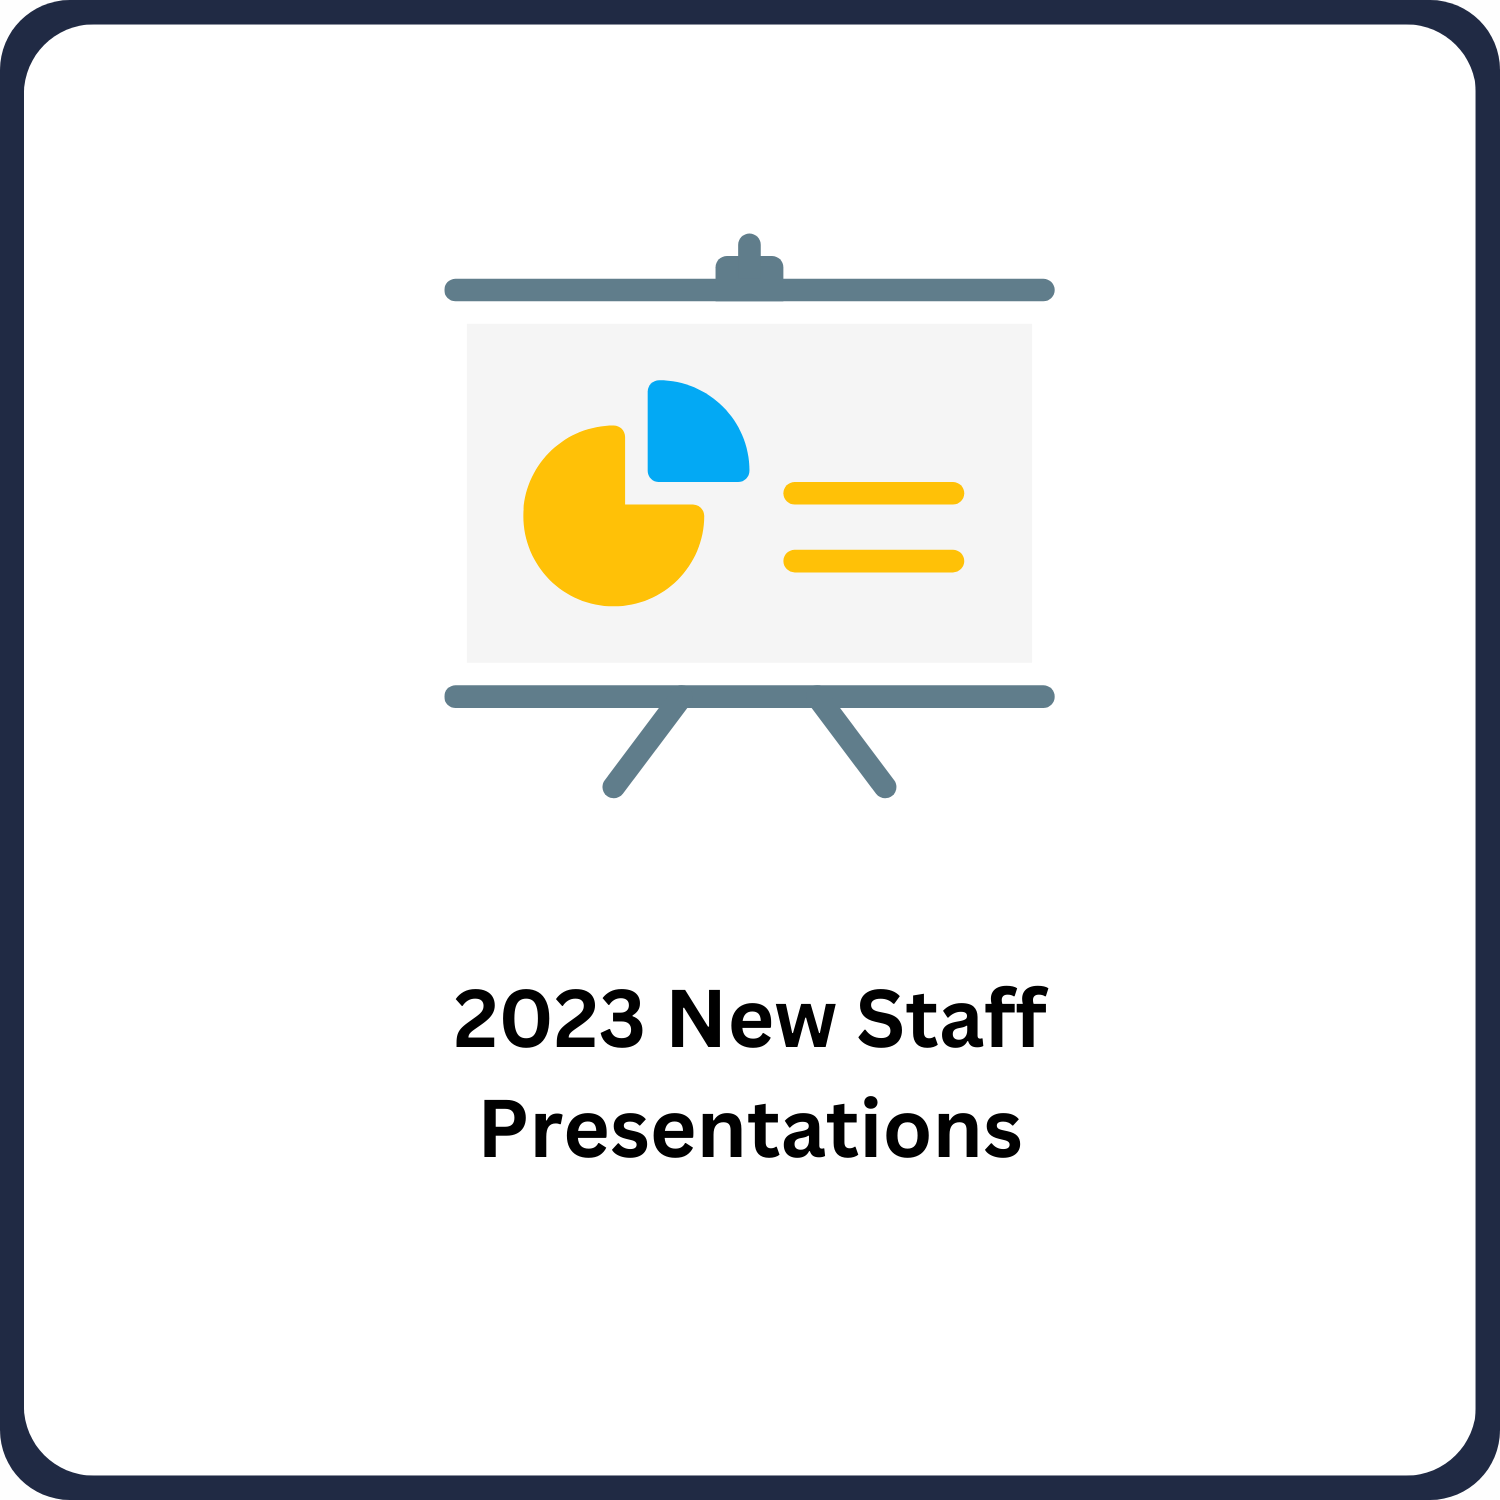 2023 New Staff Presentations